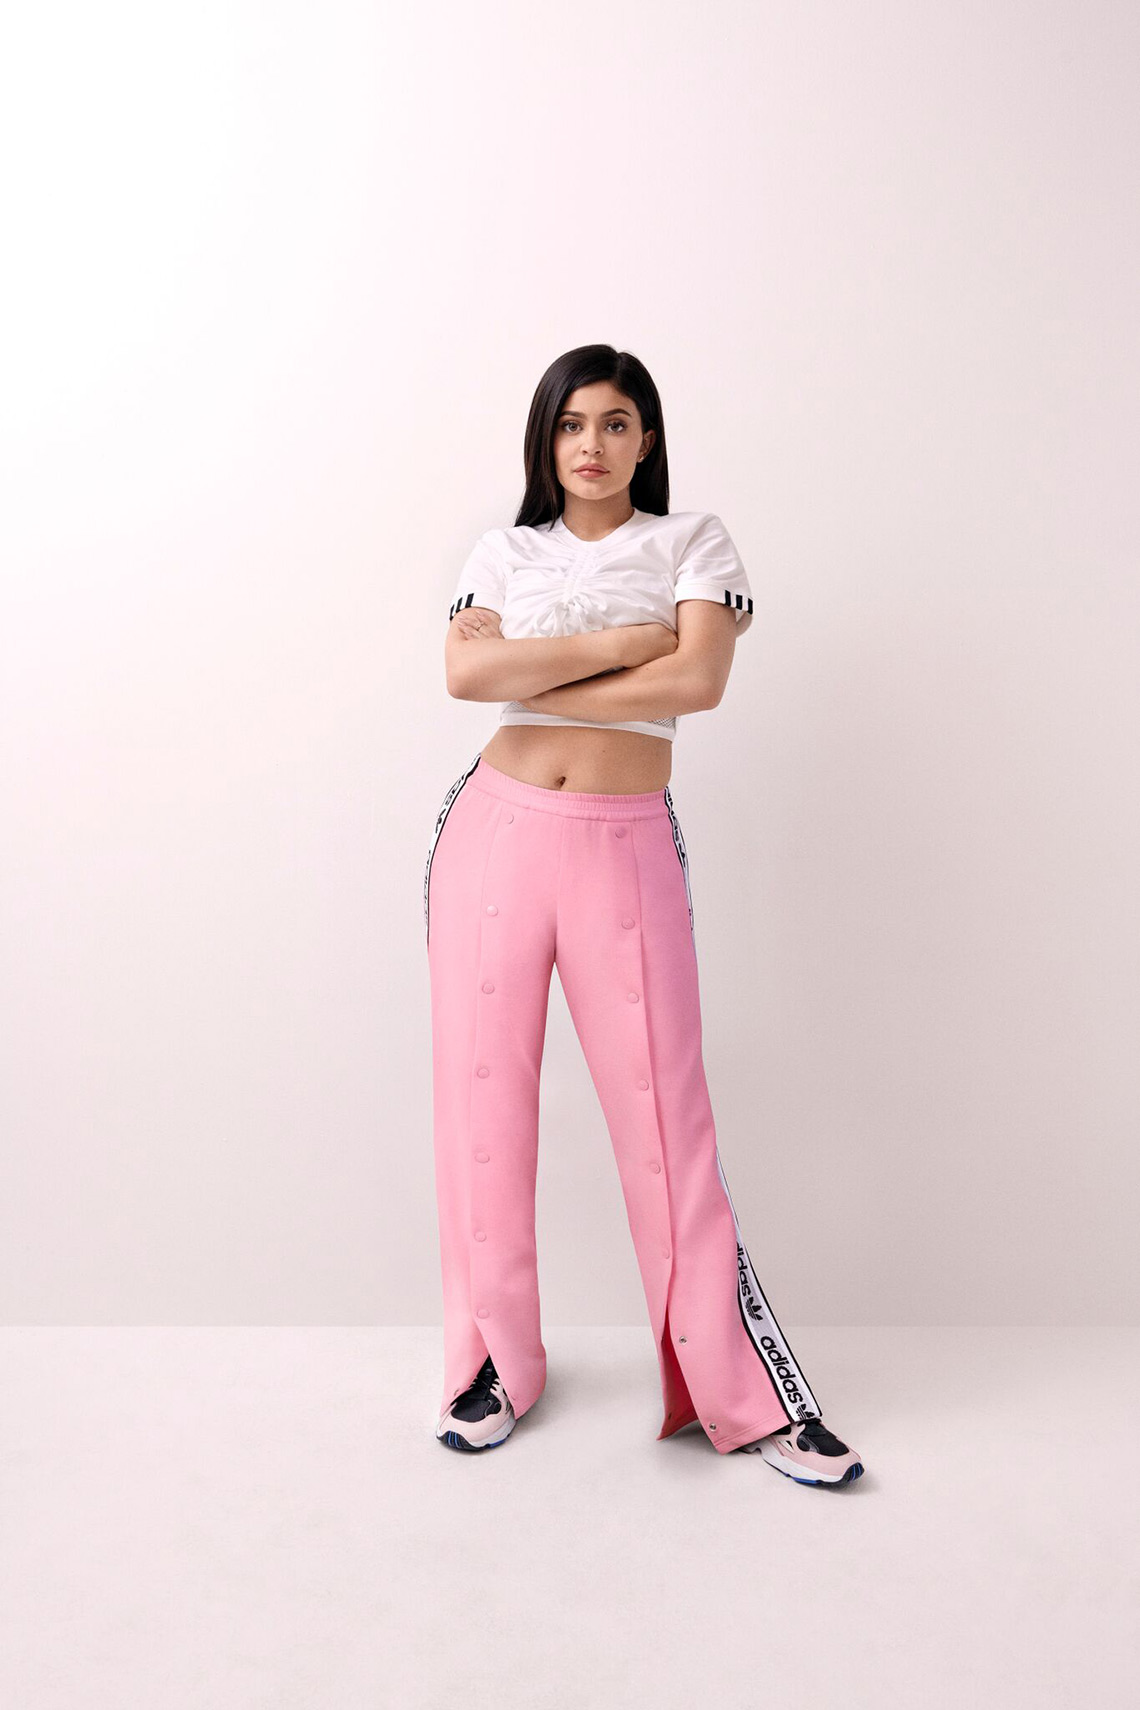 Kylie Jenner Adidas Falcon 10